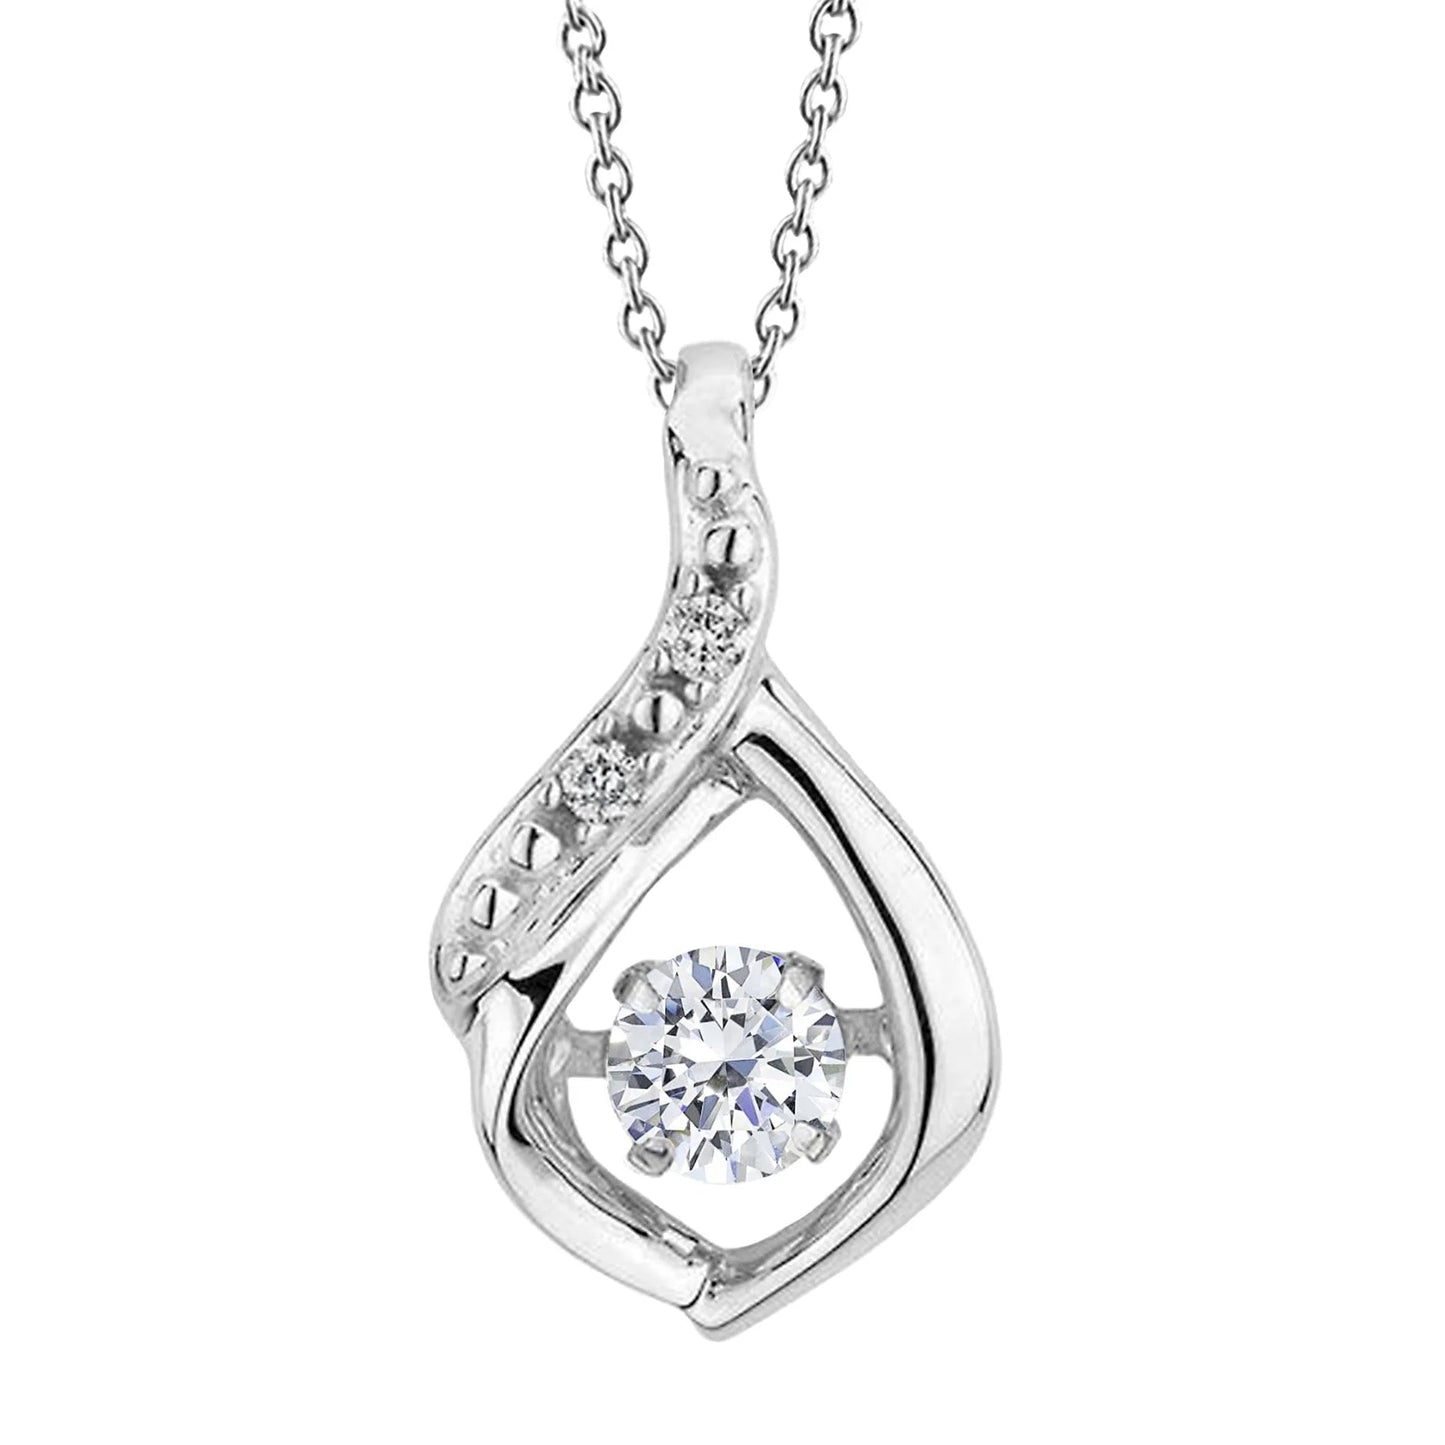 Natural Round Cut Diamond Pendant Necklace Prong Set 1.50 Carat White Gold 14K